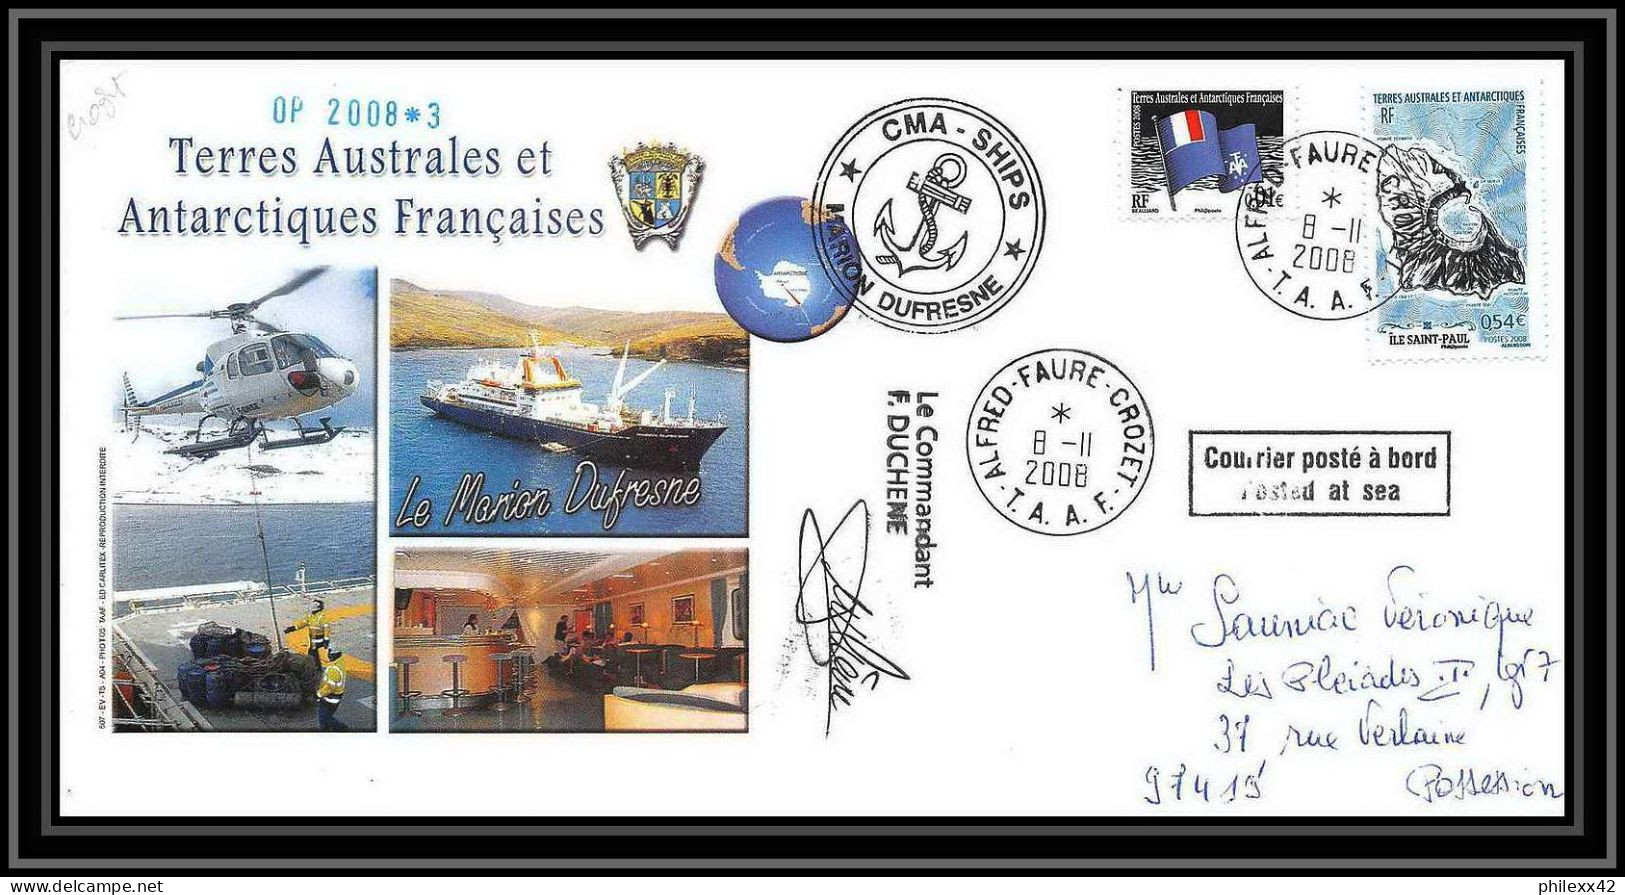 2845 ANTARCTIC Terres Australes TAAF Helilagon Lettre Cover Dufresne Signé Signed Op 2008/3 Crozet 8/11/2008 N°506 - Hubschrauber